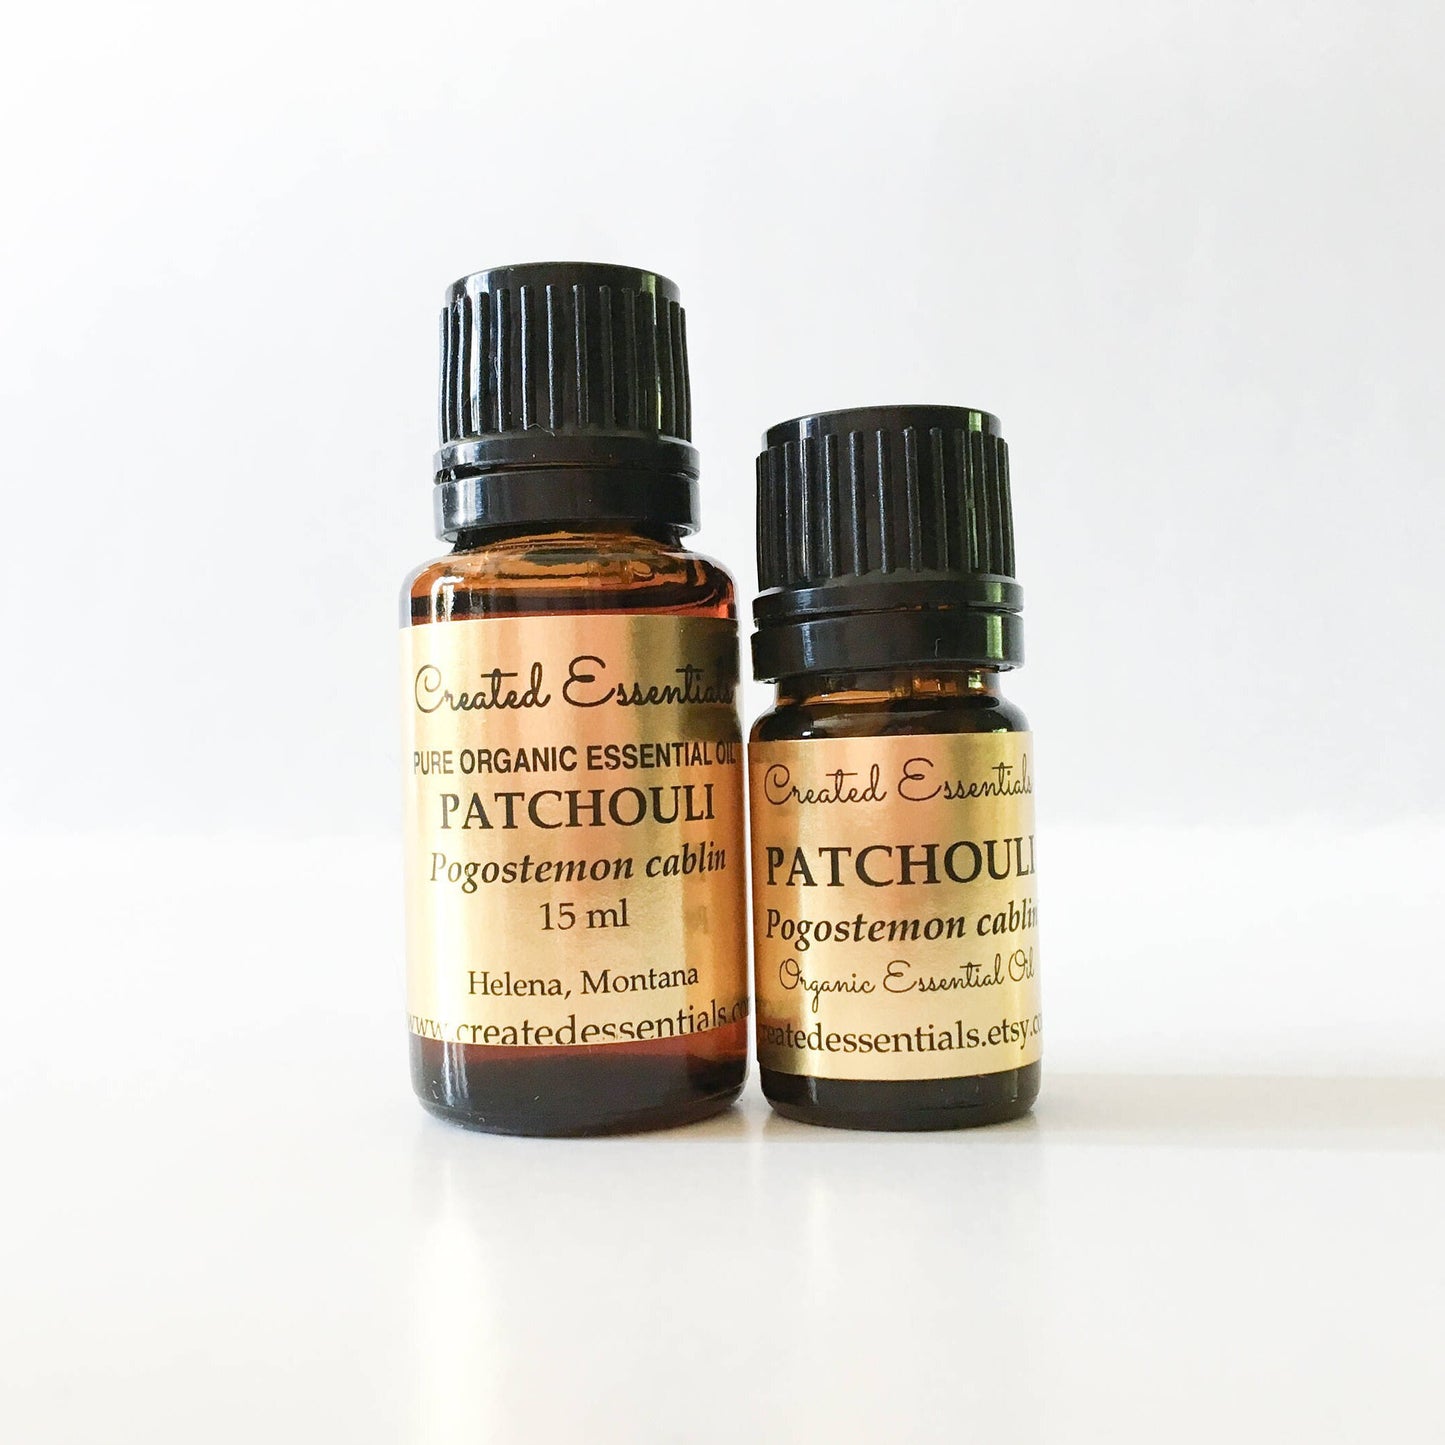 Patchouli Essential Oil | Organic Patchouli Essential Oil | |100% Pure Essential Oil | Therapeutic Essential Oil of Patchouli | Aromatherapy